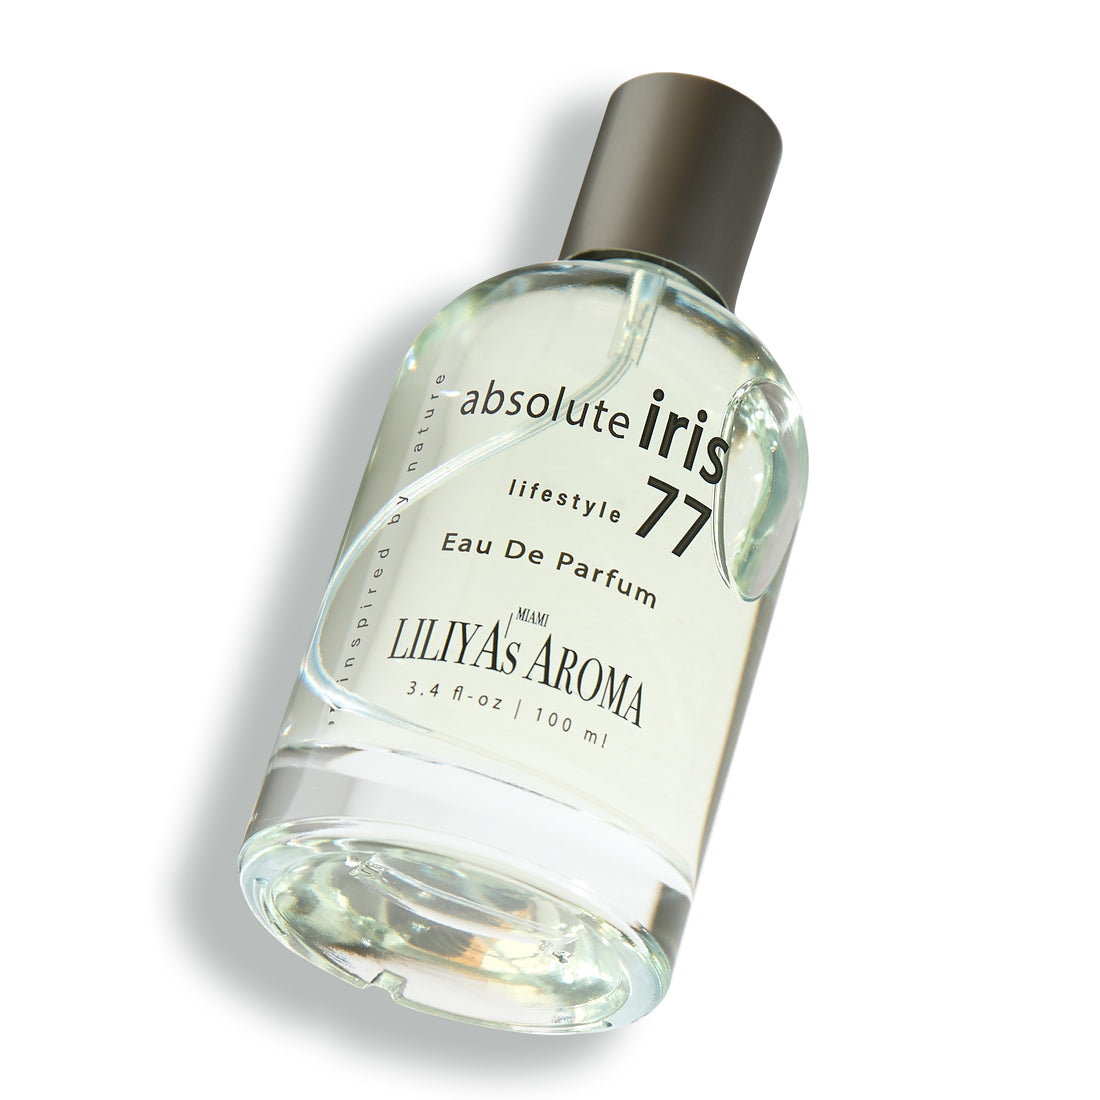 Absolute Iris 77 Eau De Parfum -  Perfume for Women &amp; Men  3.4 Fl Oz